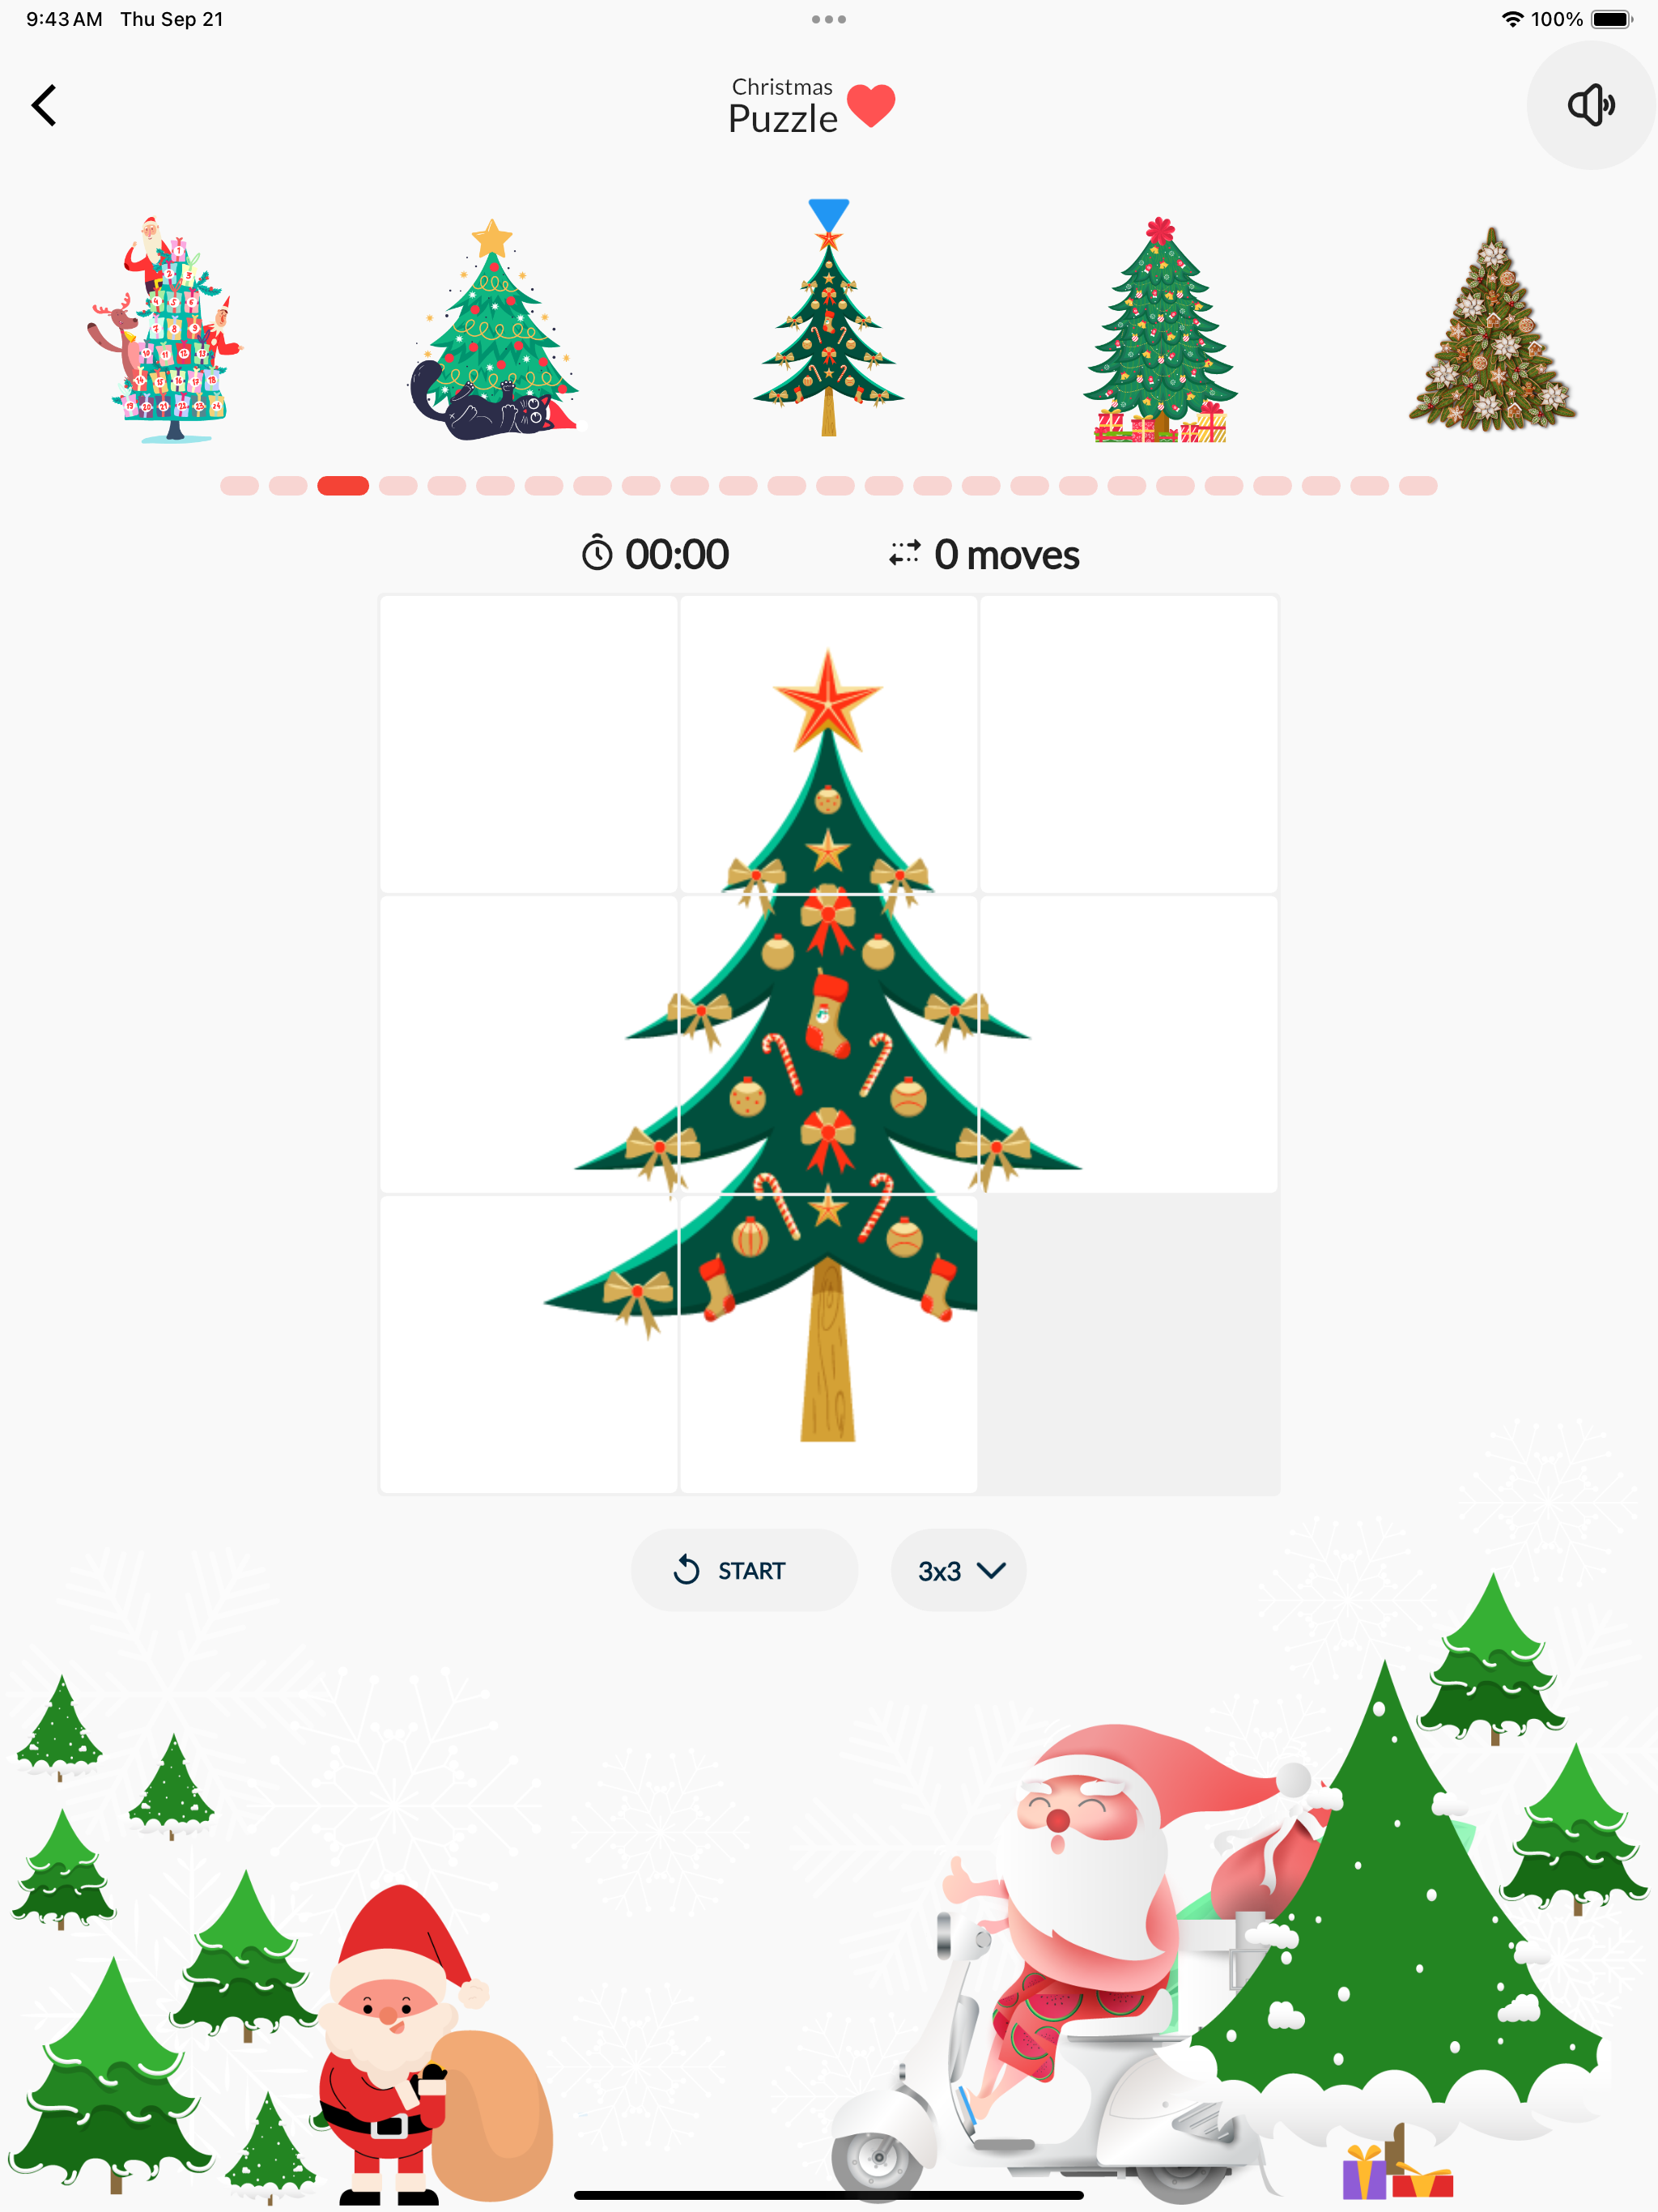 Screenshot of Merry Christmas Sliding Puzzle